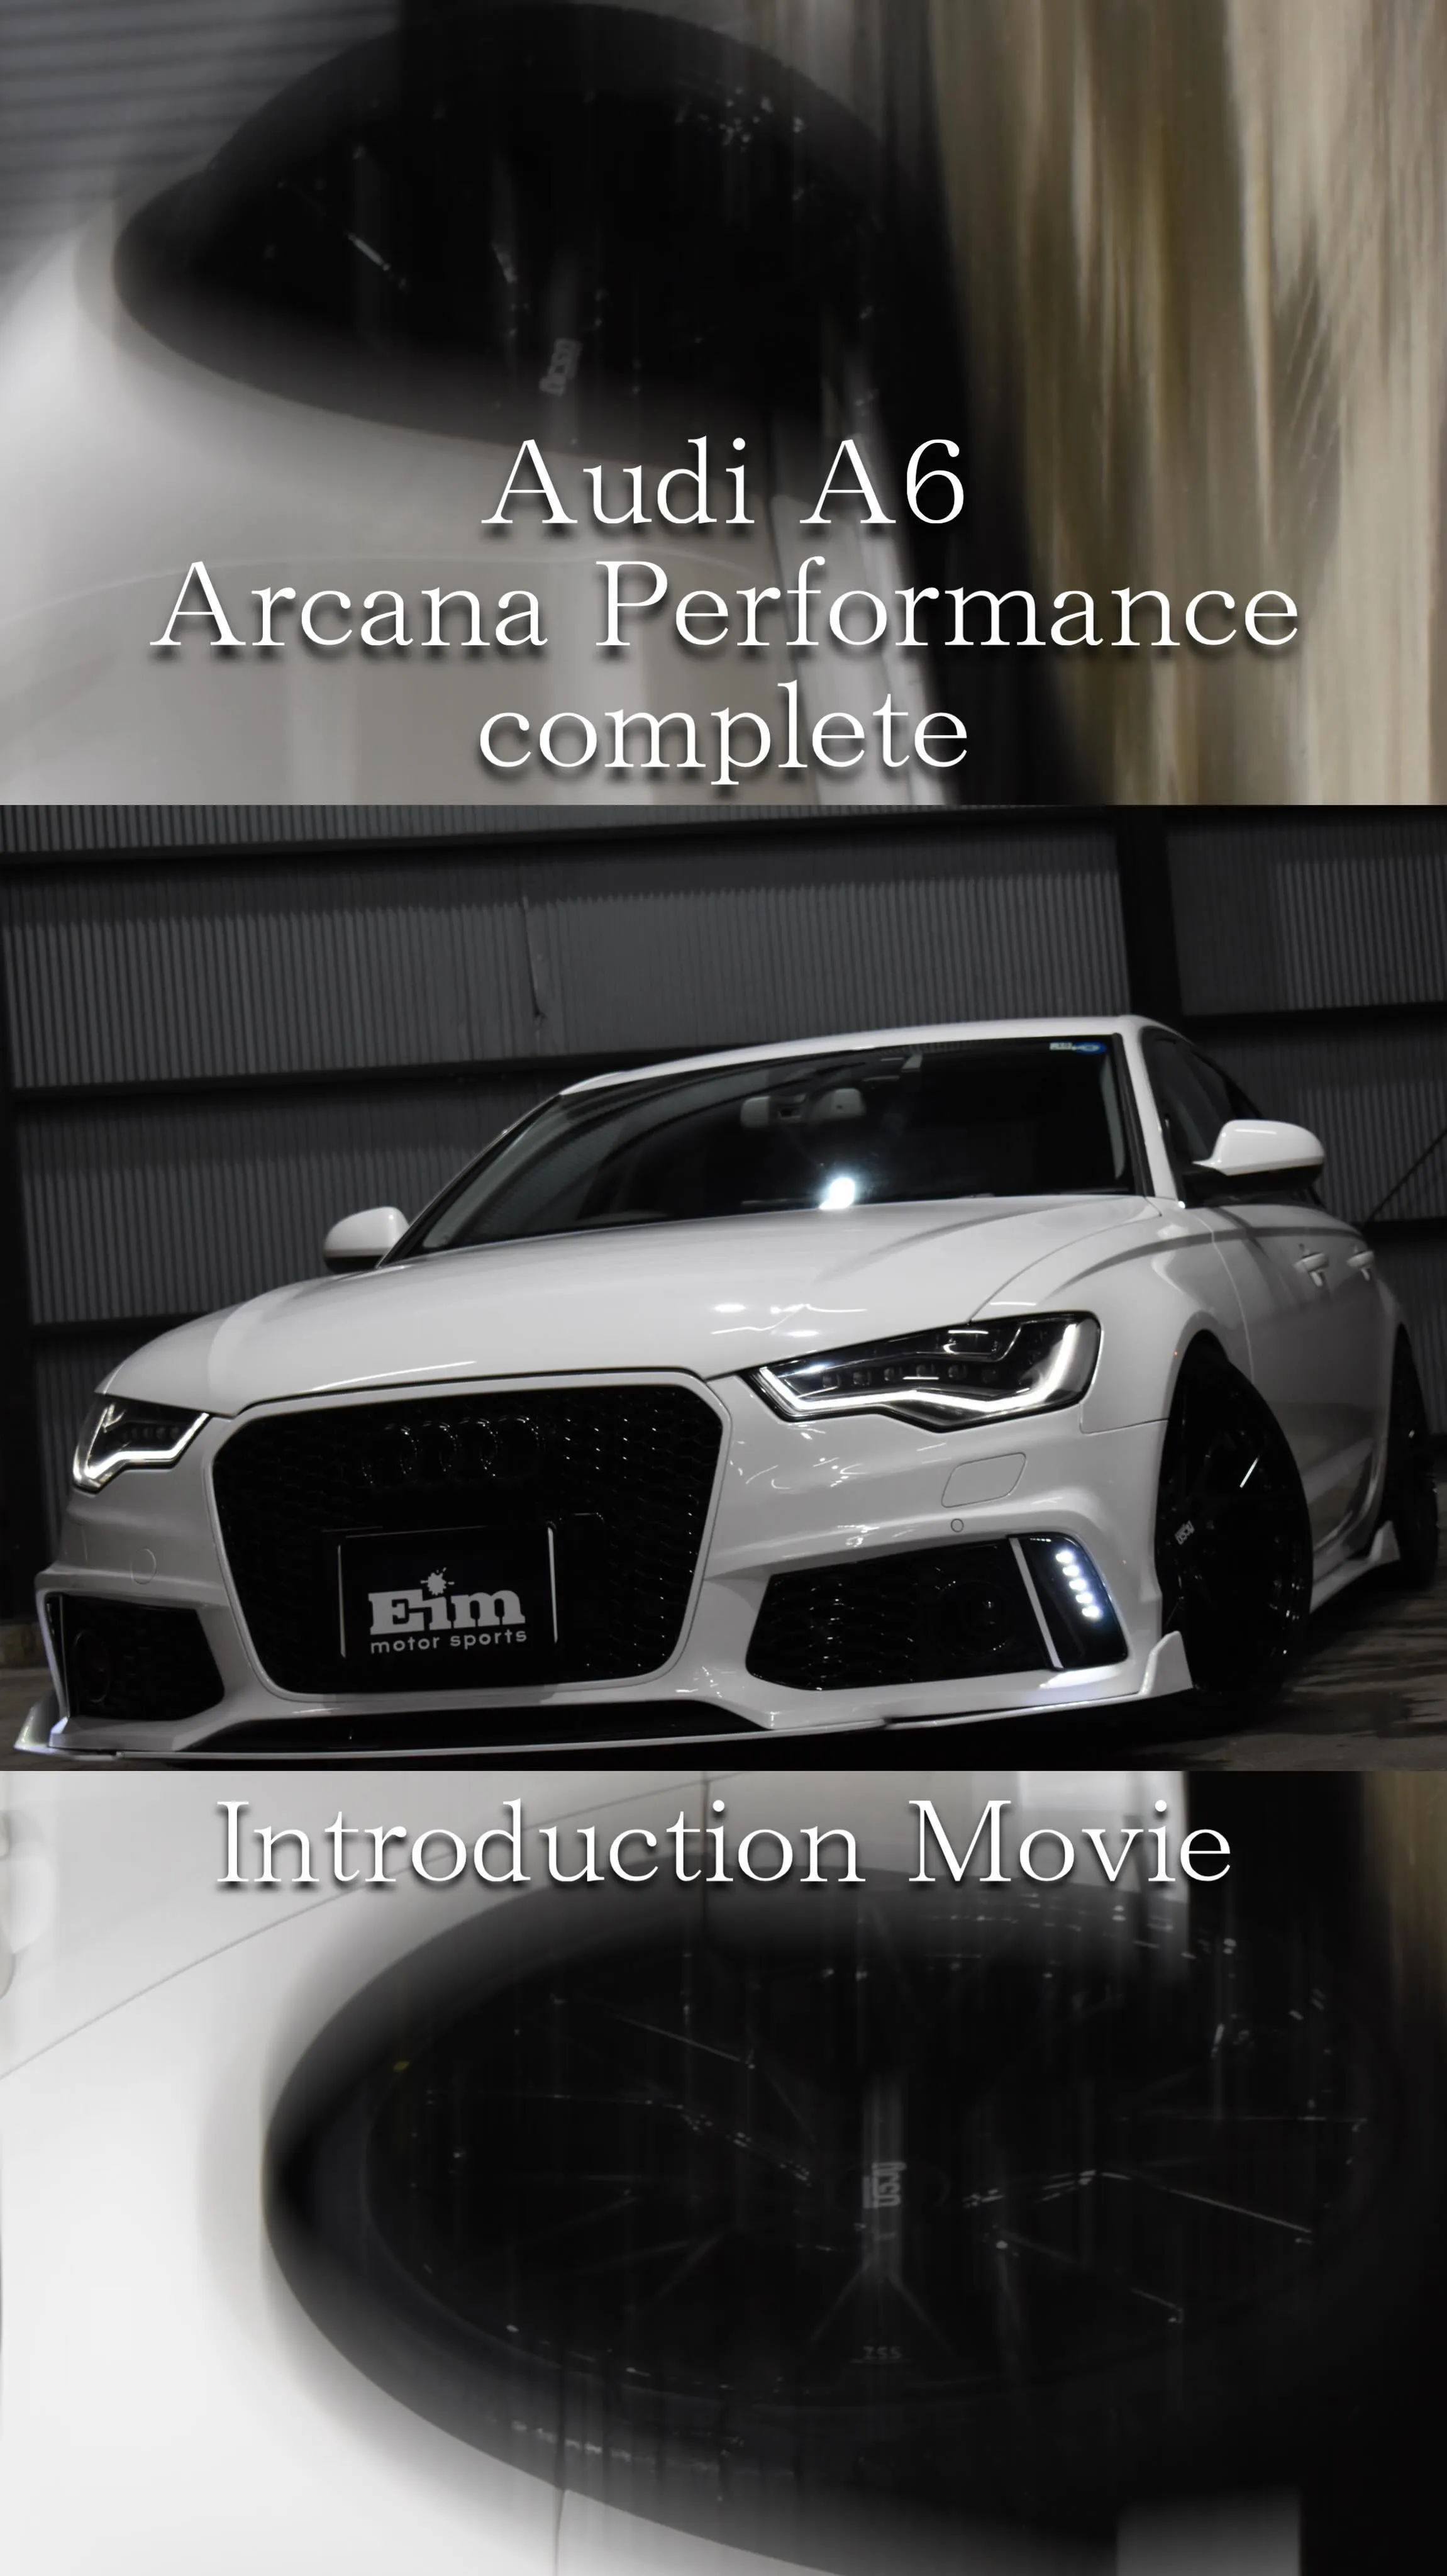 Audi A6 Arcana Performance complete